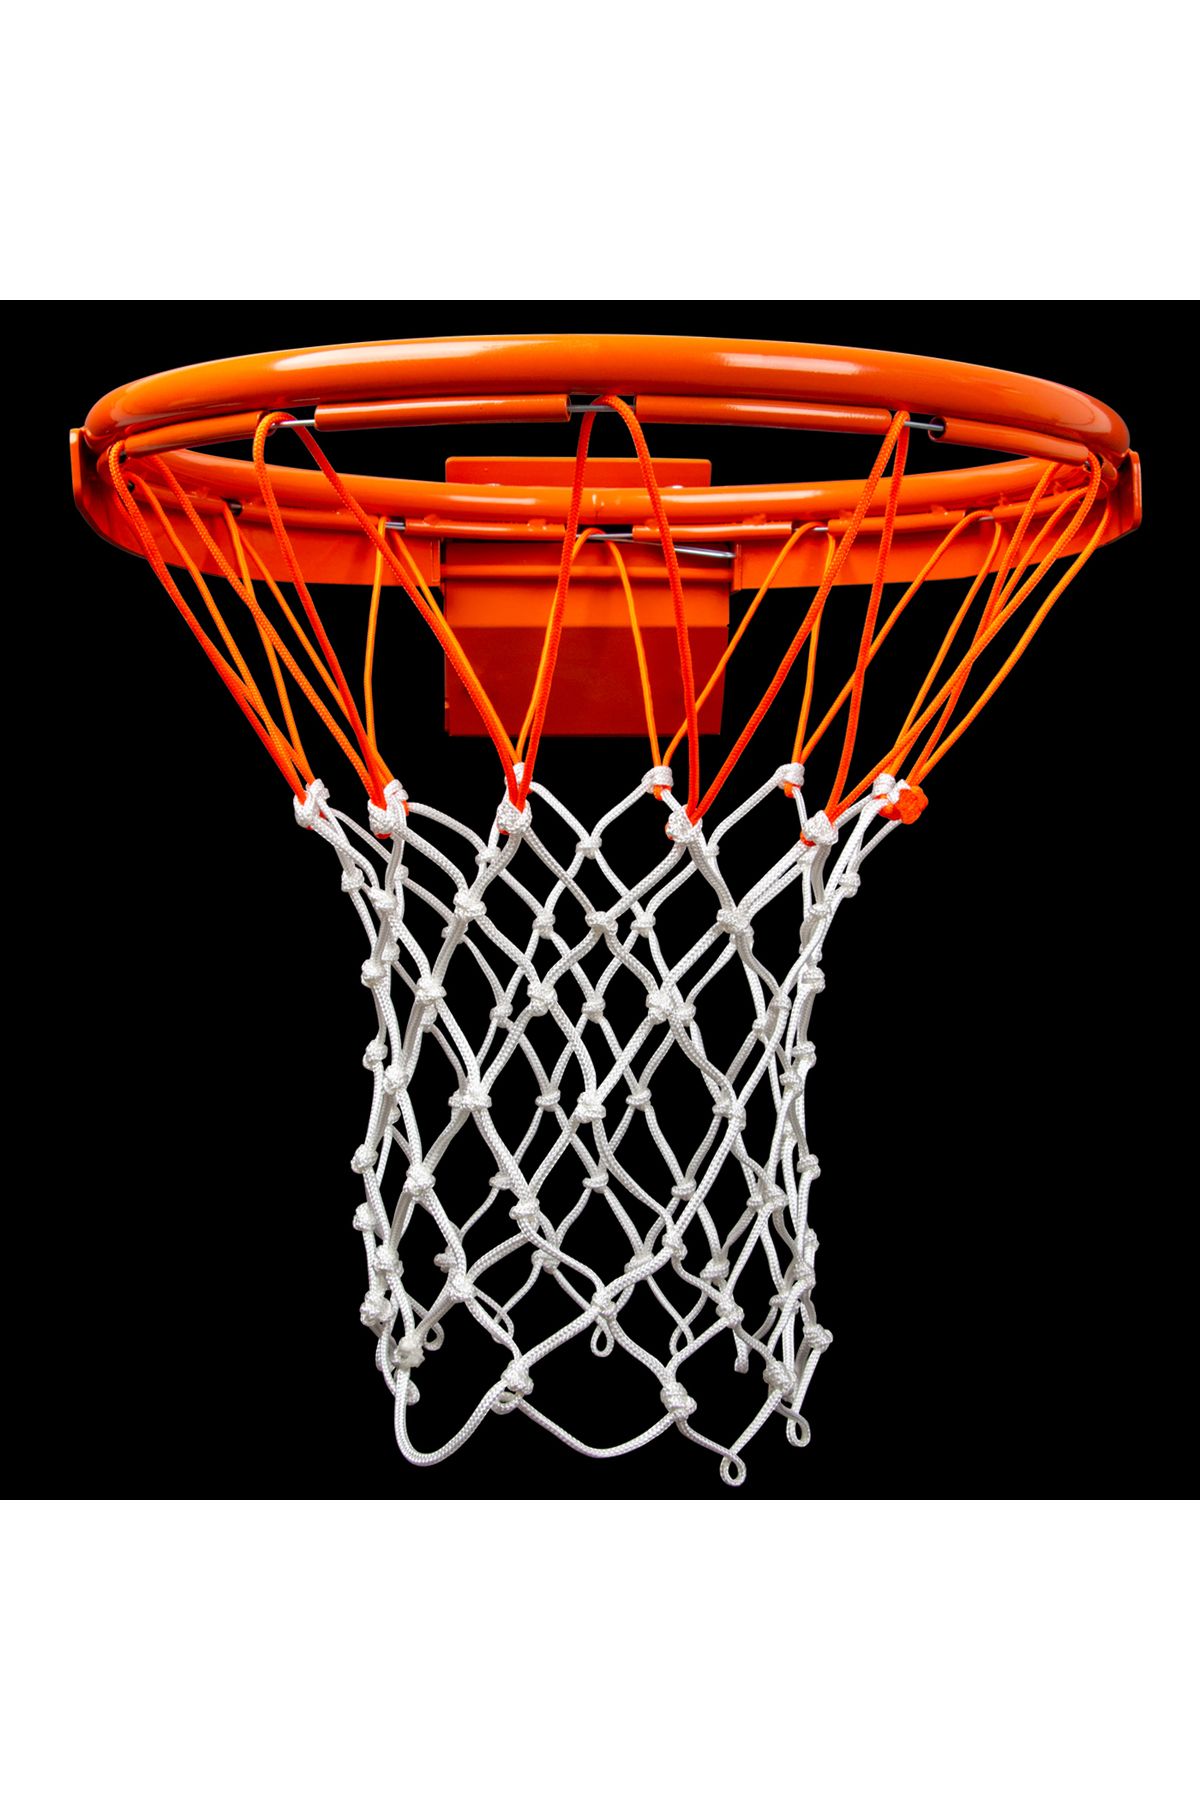 Nodes Basketbol Pota Filesi - Profesyonel - NBA Model - 2 Renk - 2 Adet